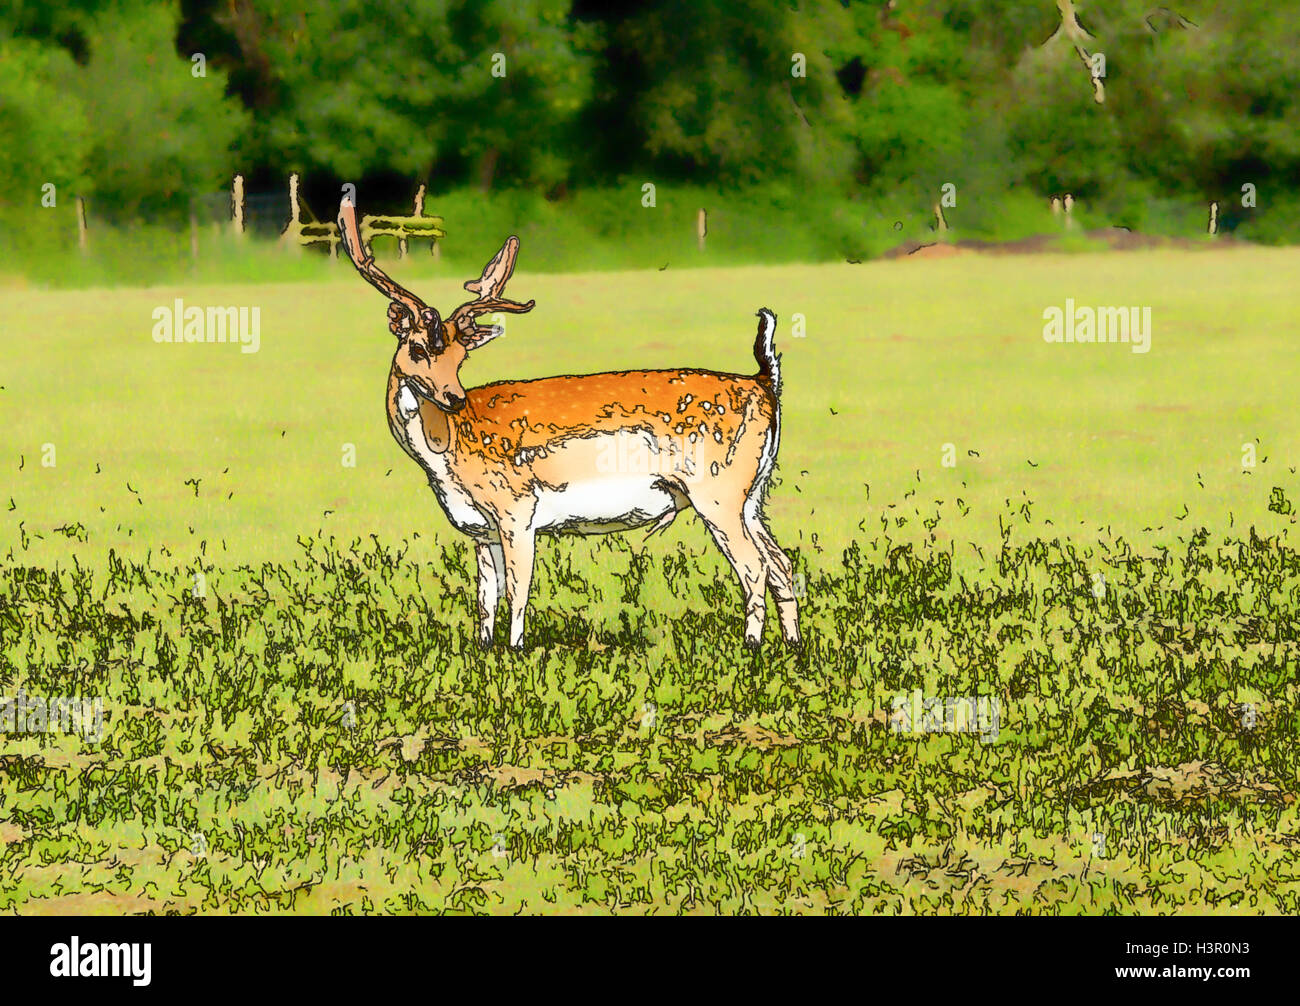 Wild deer New Forest Hampshire England uk English country scene illustration like cartoon effect Stock Photo